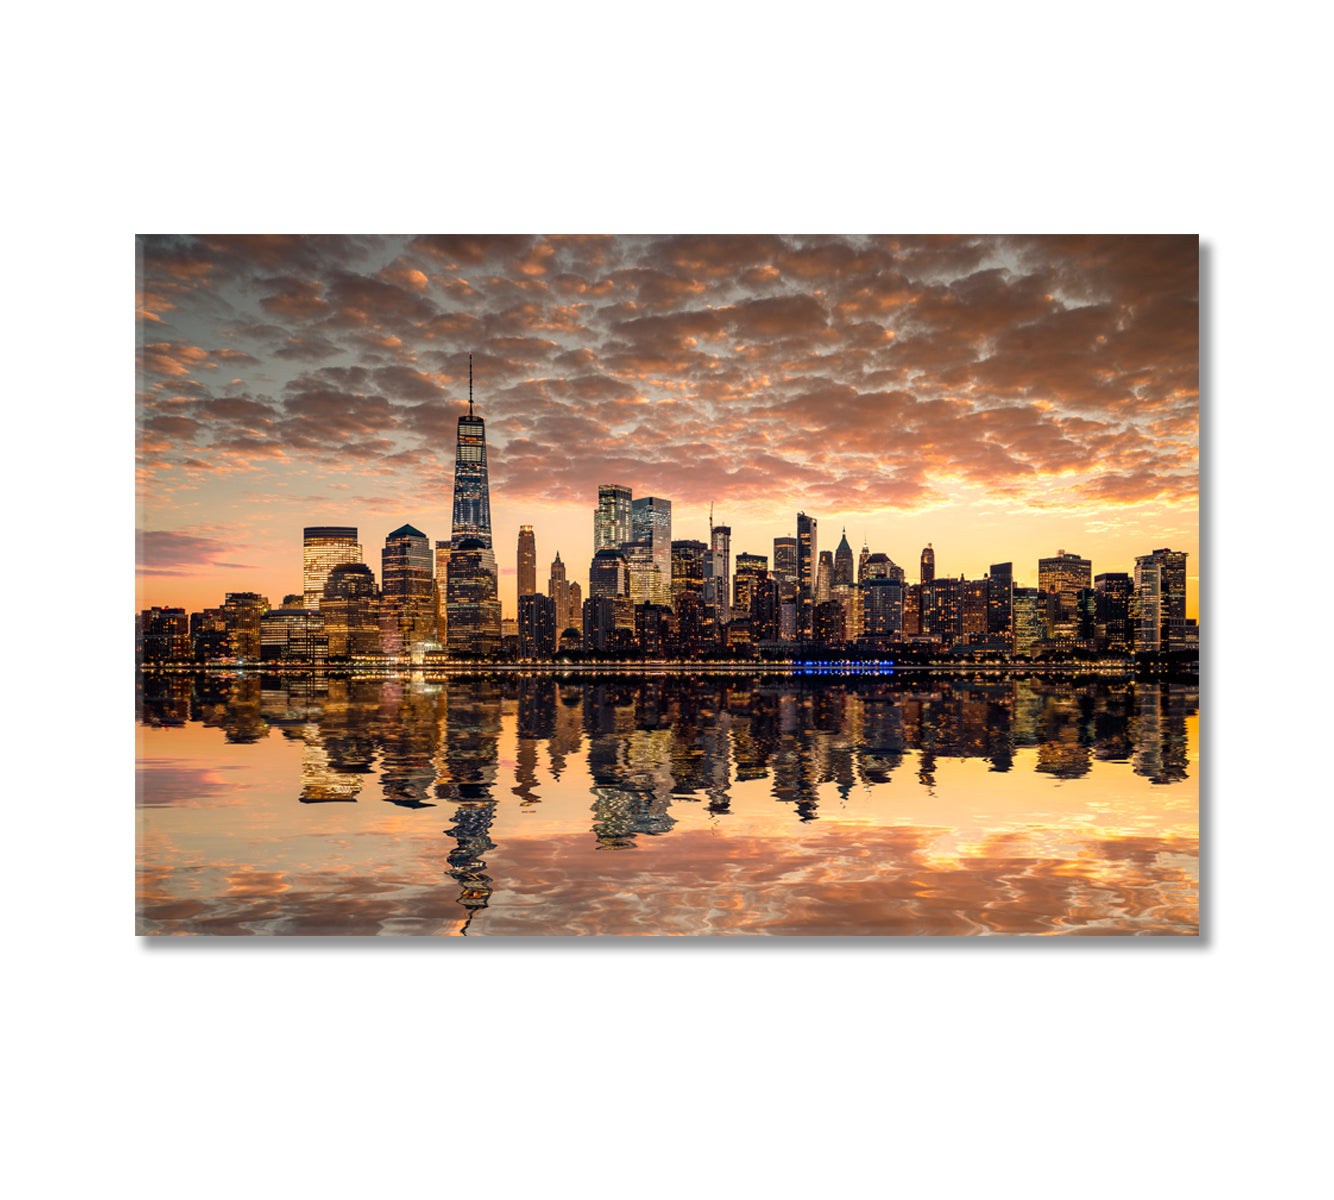 New York USA Downtown Skyline at Dusk Canvas Print-Canvas Print-CetArt-1 Panel-24x16 inches-CetArt